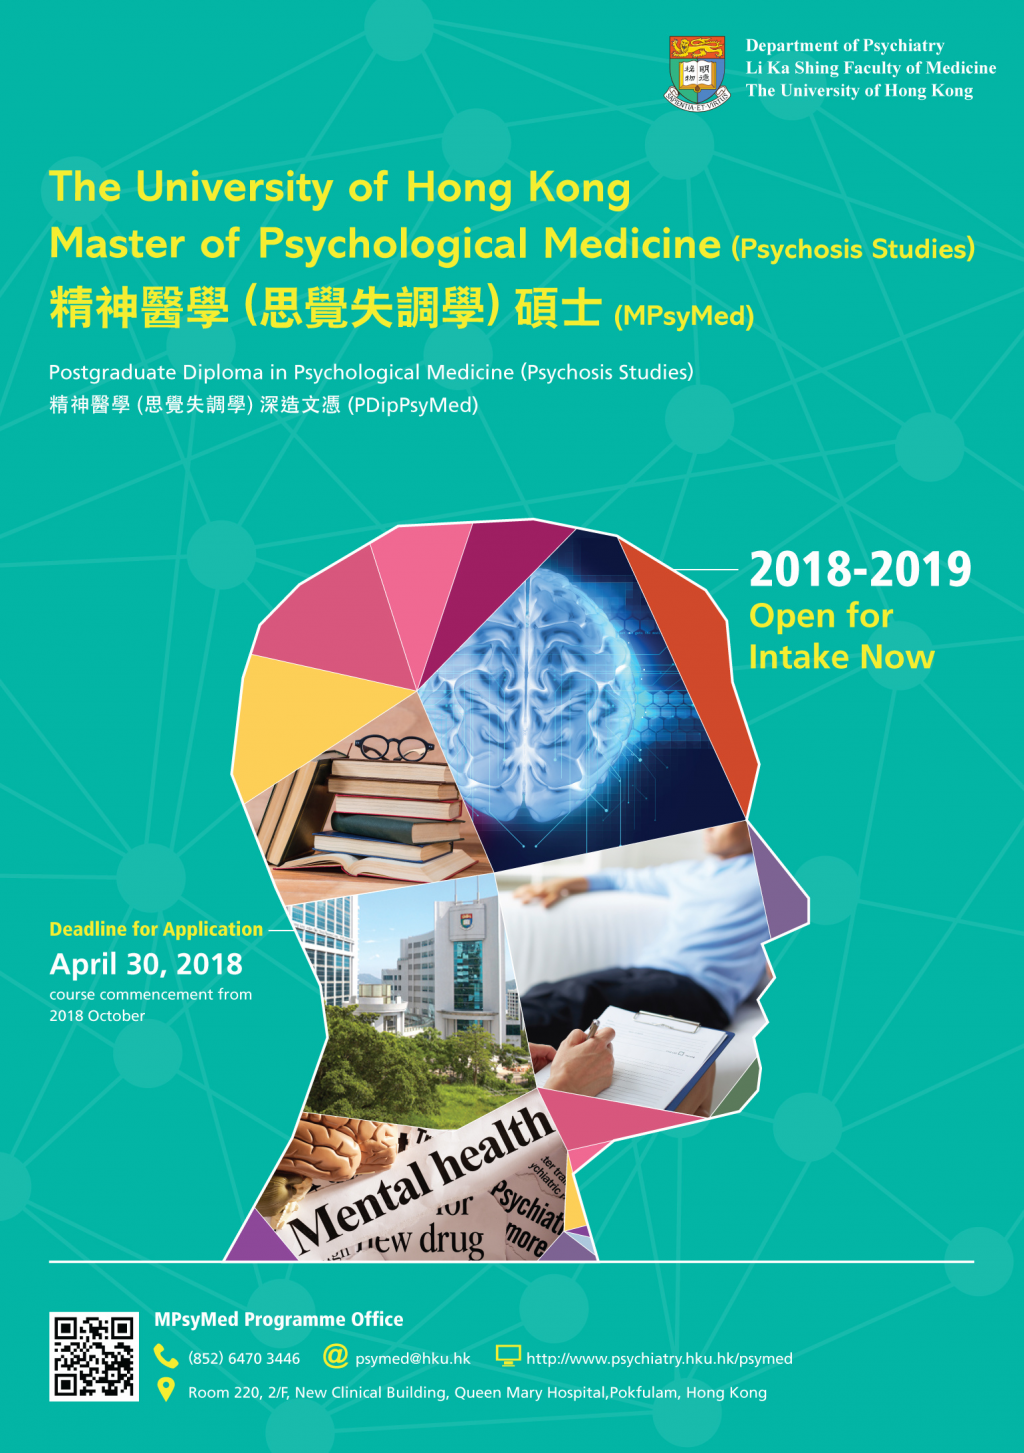 Application for Master of Psychological Medicine by Apr 30